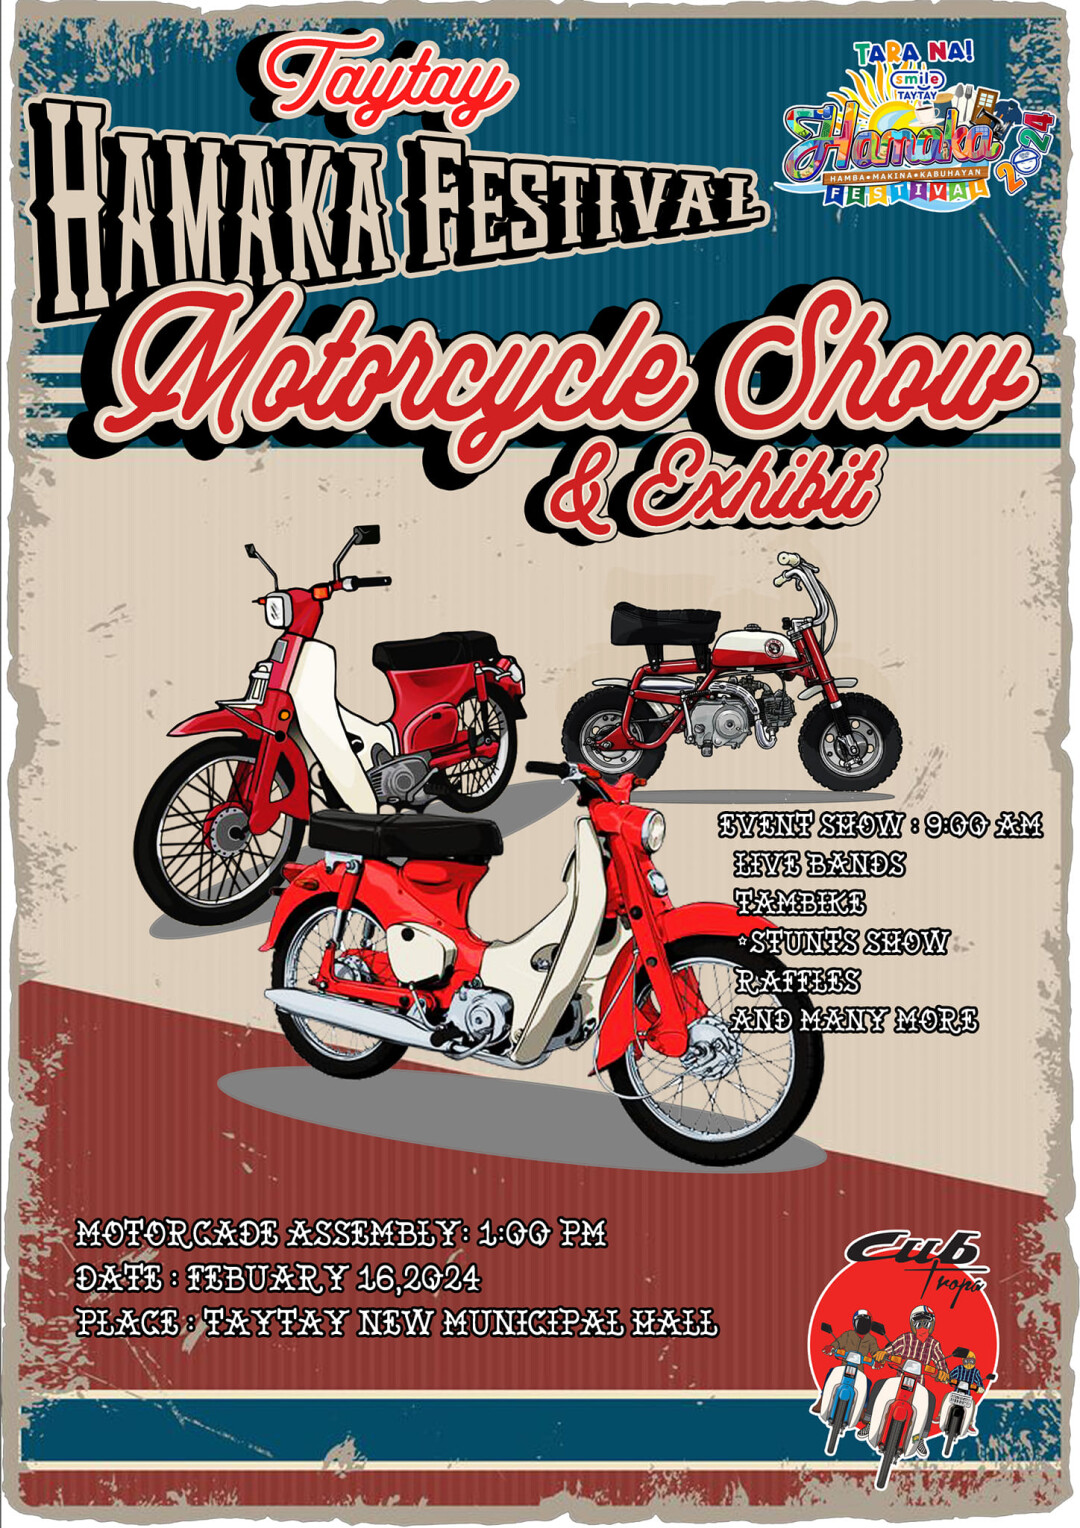 HAMAKA FESTIVAL Motorcycle Show & Exhibit